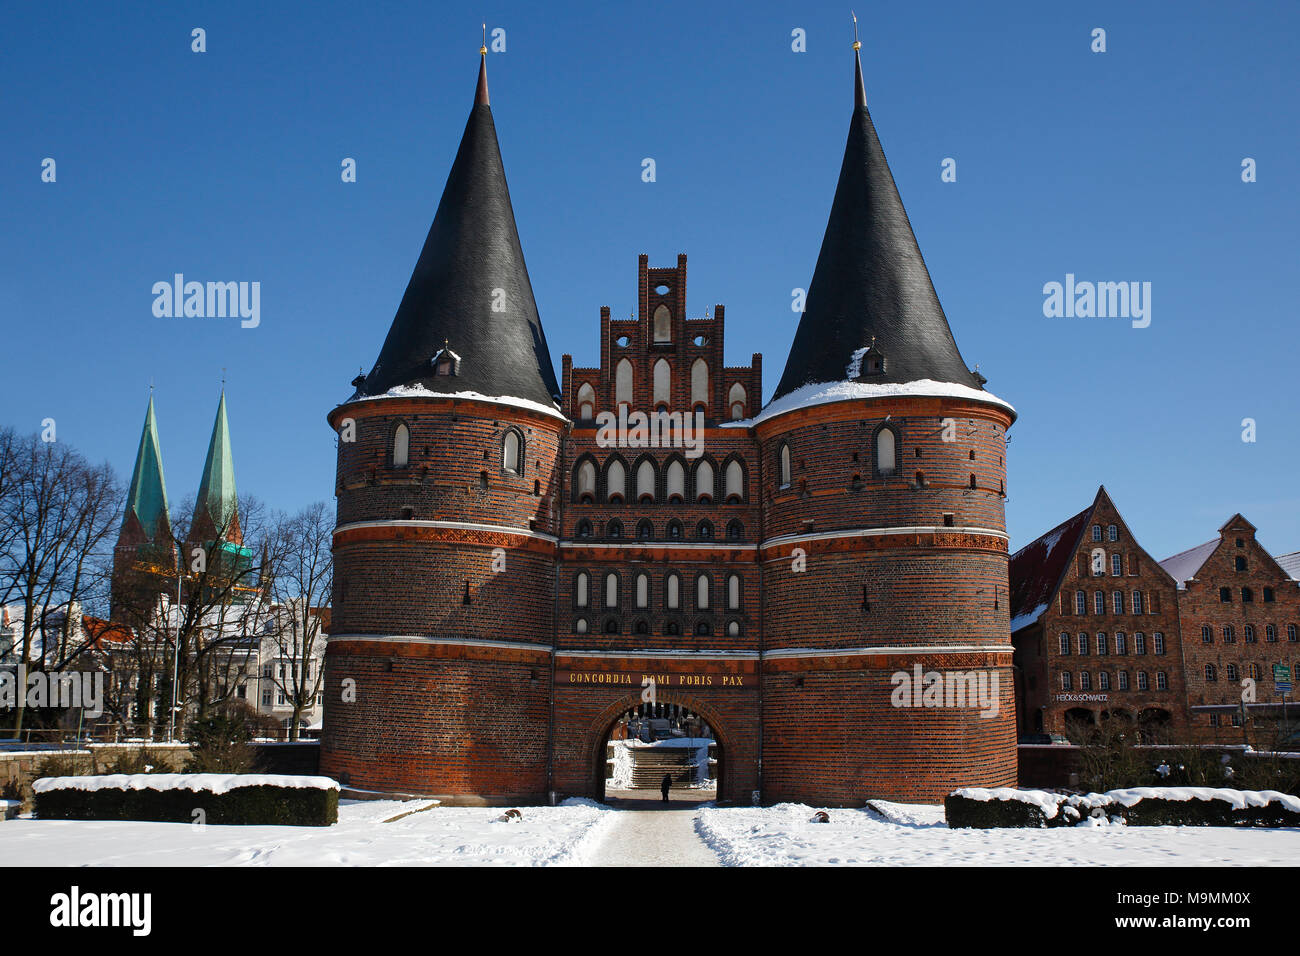 Holstentor in winter in the snow, Salzspeicher and church St. Petri, Lübeck, Schleswig-Holstein, Germany Stock Photo